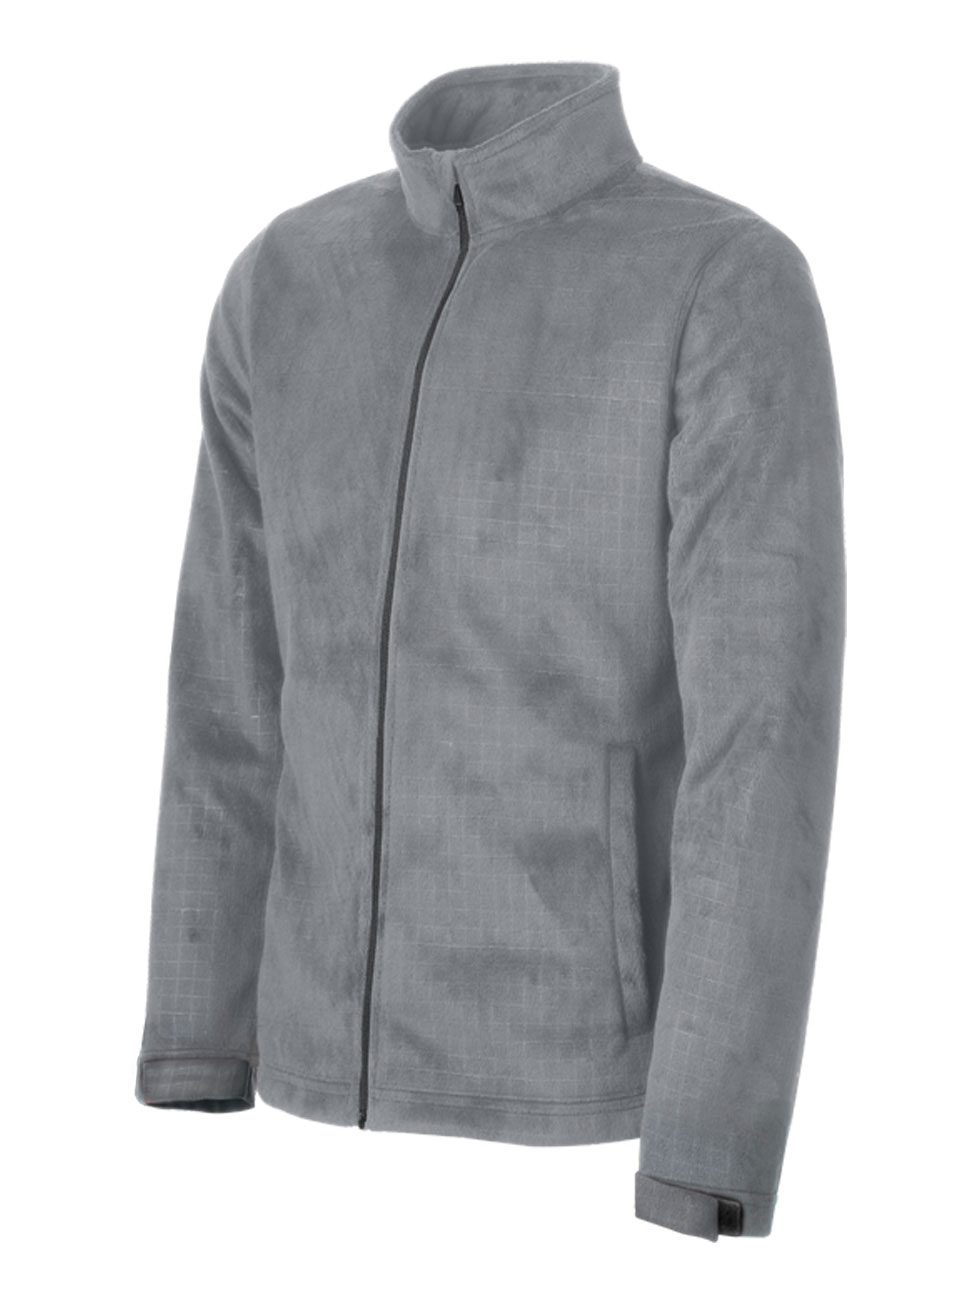 Fila Men's Jasper Textured Fleece Performance Jacket #FA3754 Silver